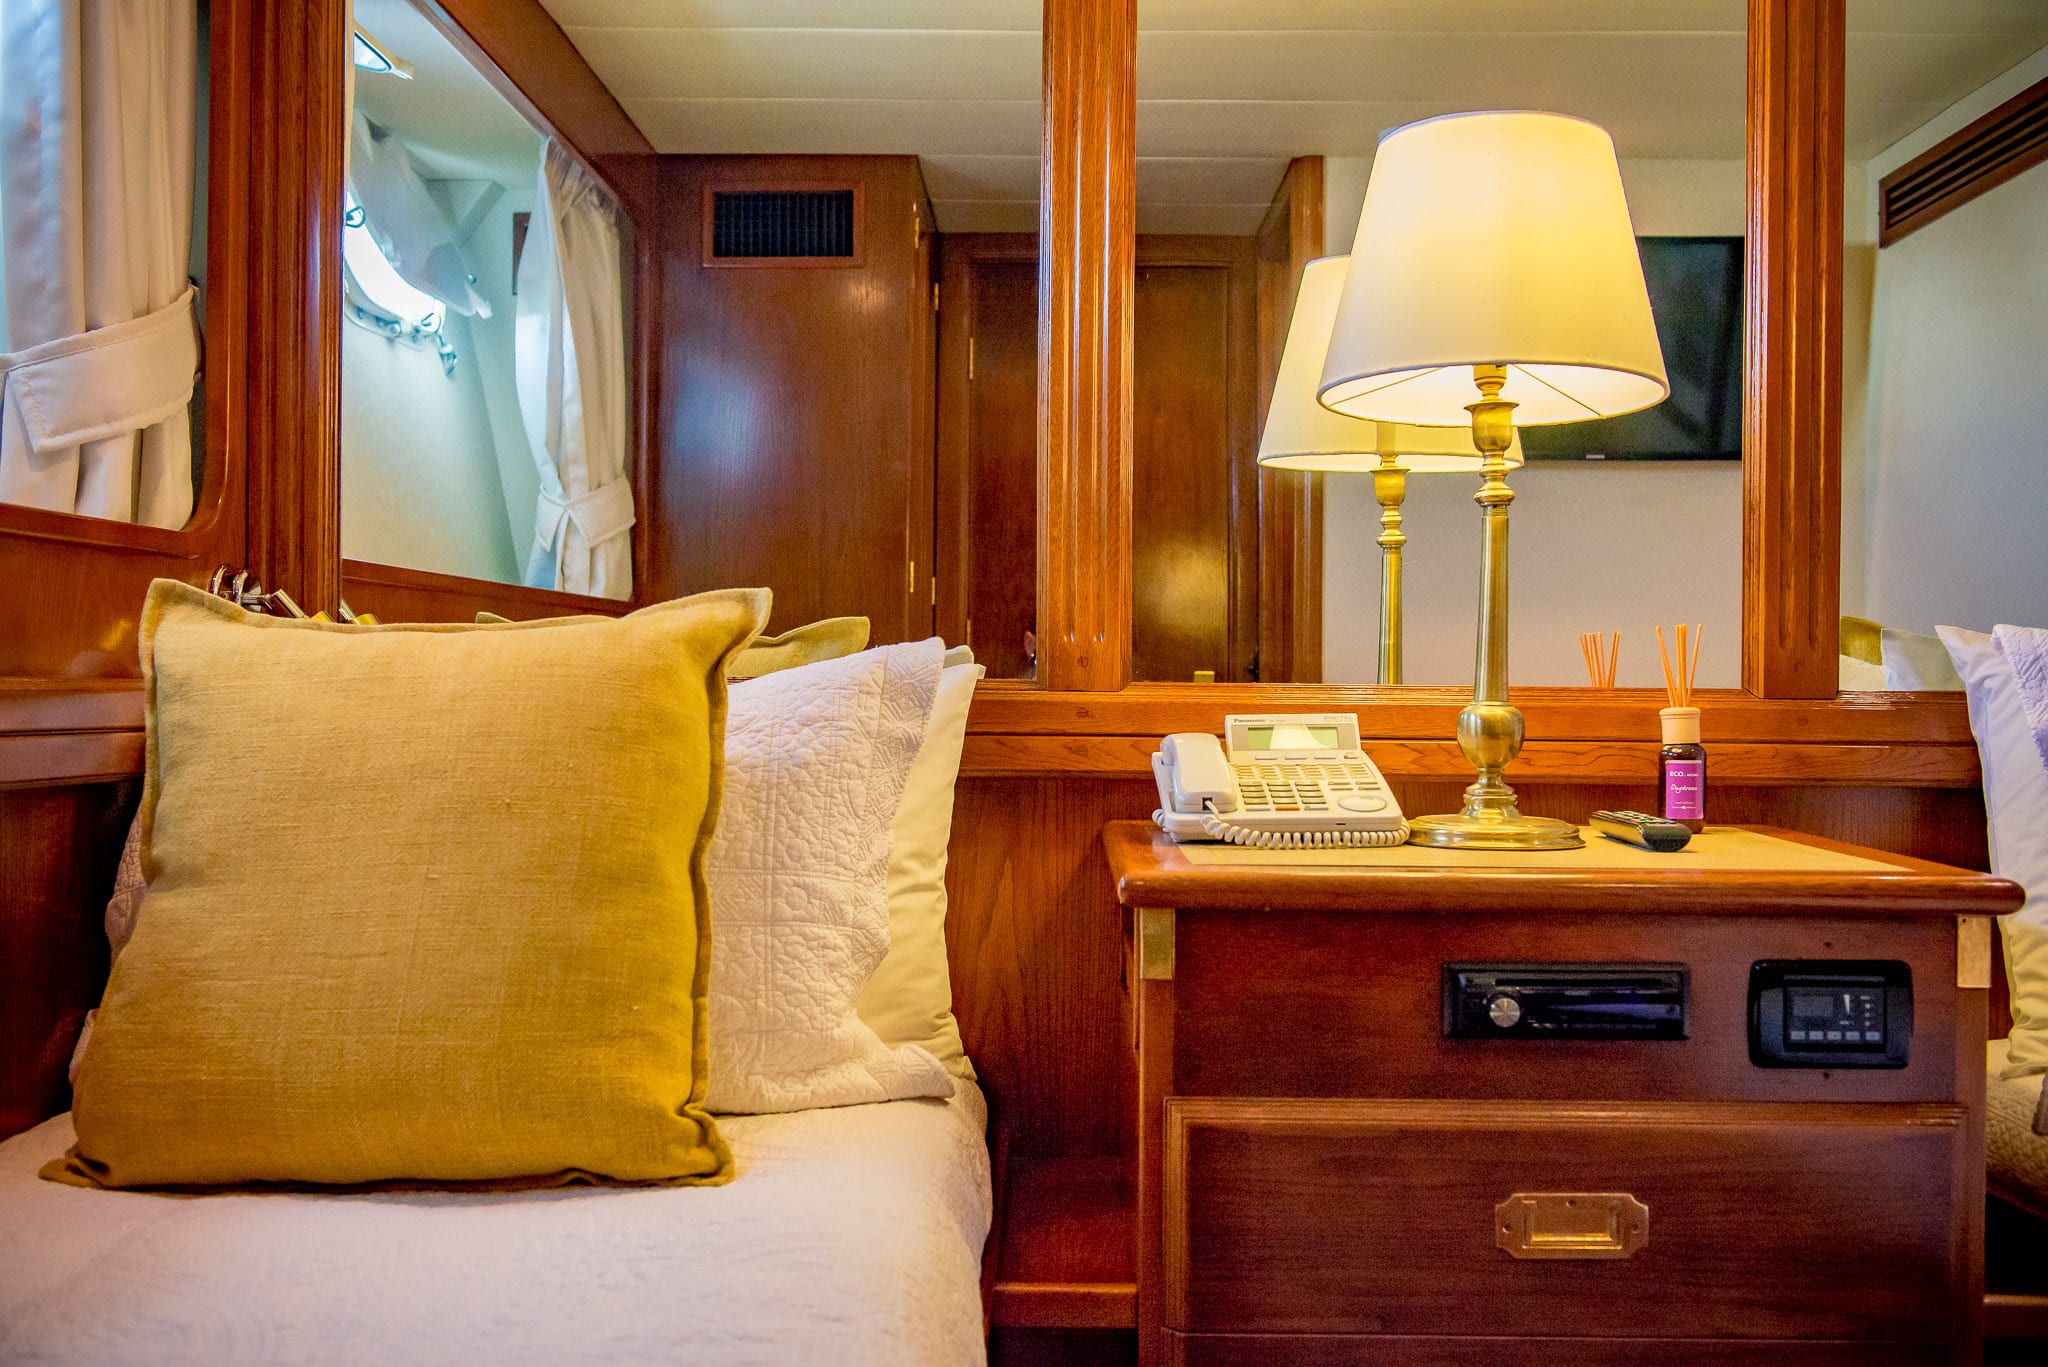 Phoenix One Luxury Yacht Charter Boat Phoenix 1 Phoenix I cabin stateroom